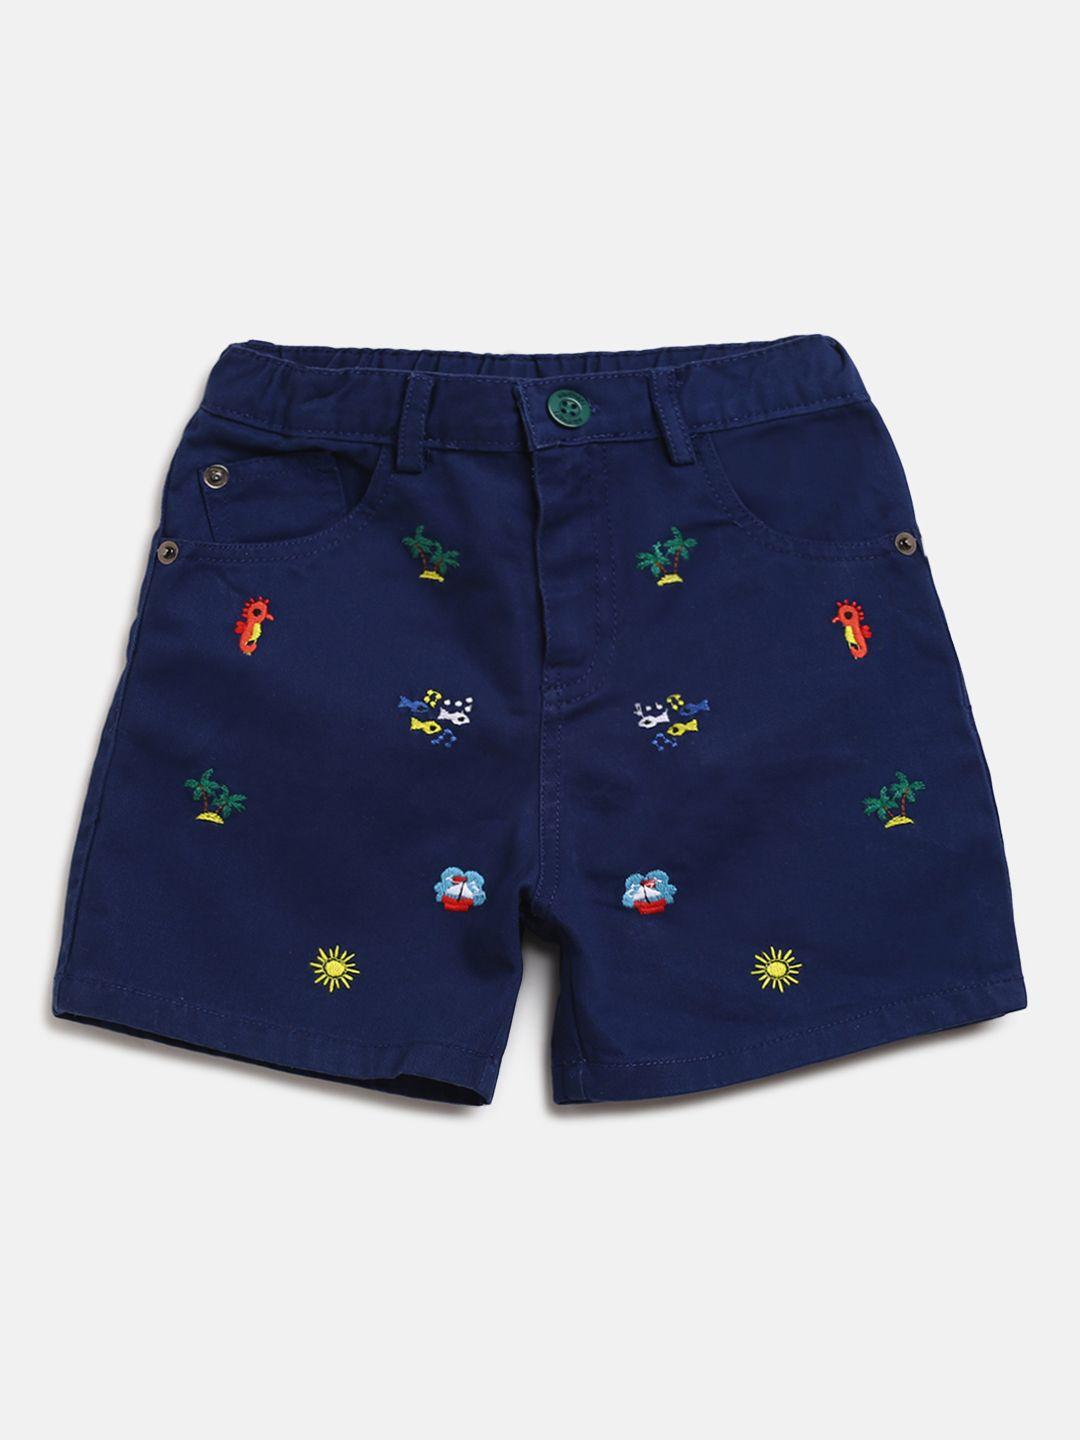 nauti nati boys navy blue embroidered regular fit regular shorts